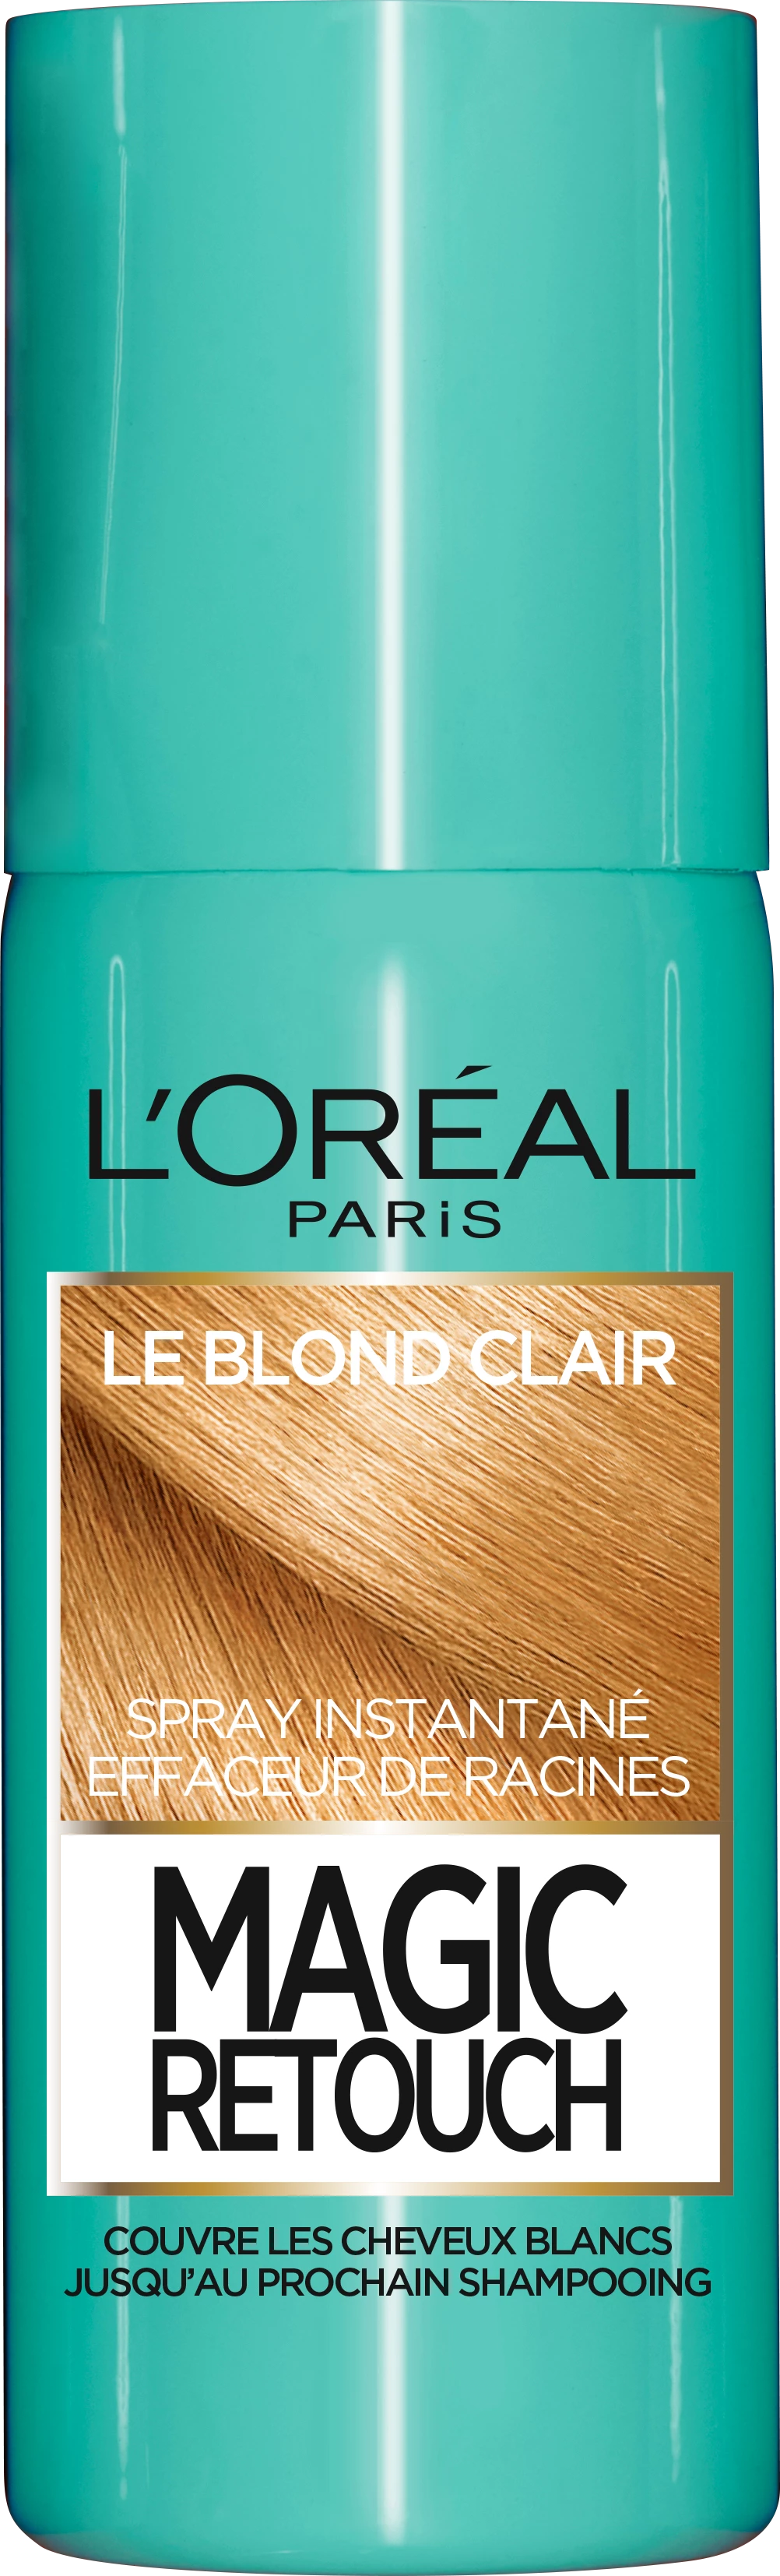 Magic Retouch Blond Clair - L'OREAL PARIS